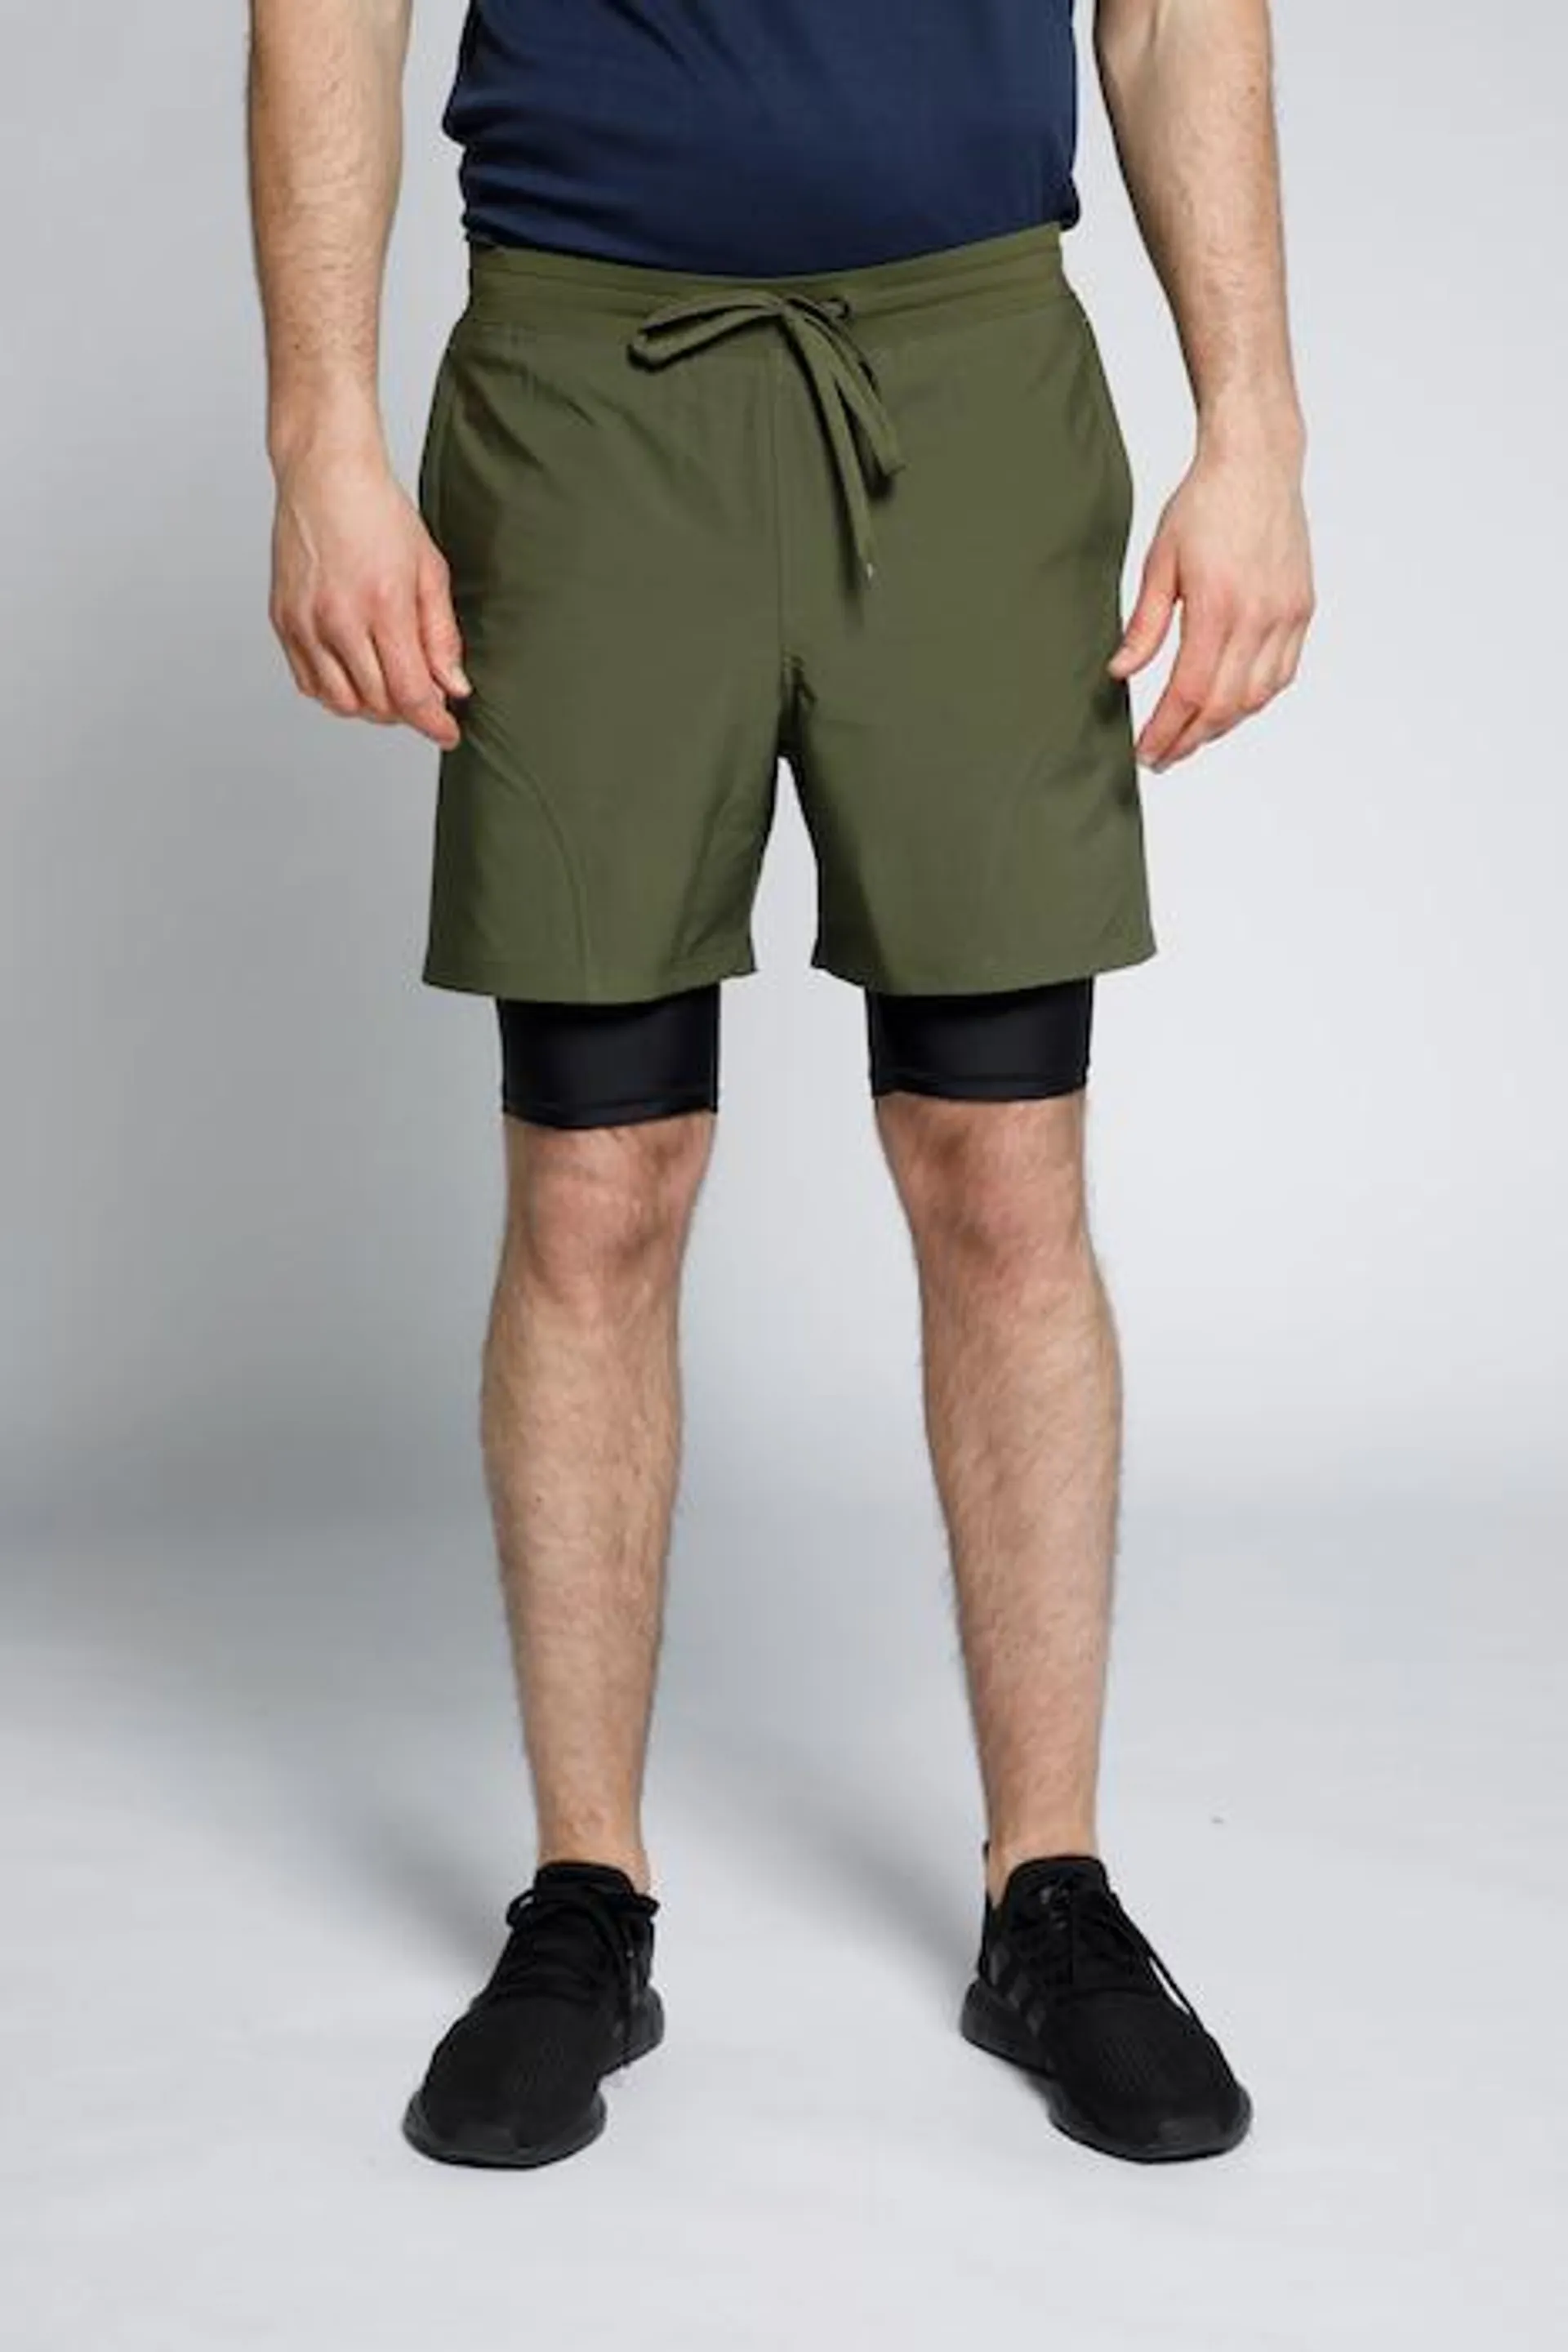 JAY-PI sport-shorts FLEXNAMIC®, quick-dry, elastische band, binnenslip